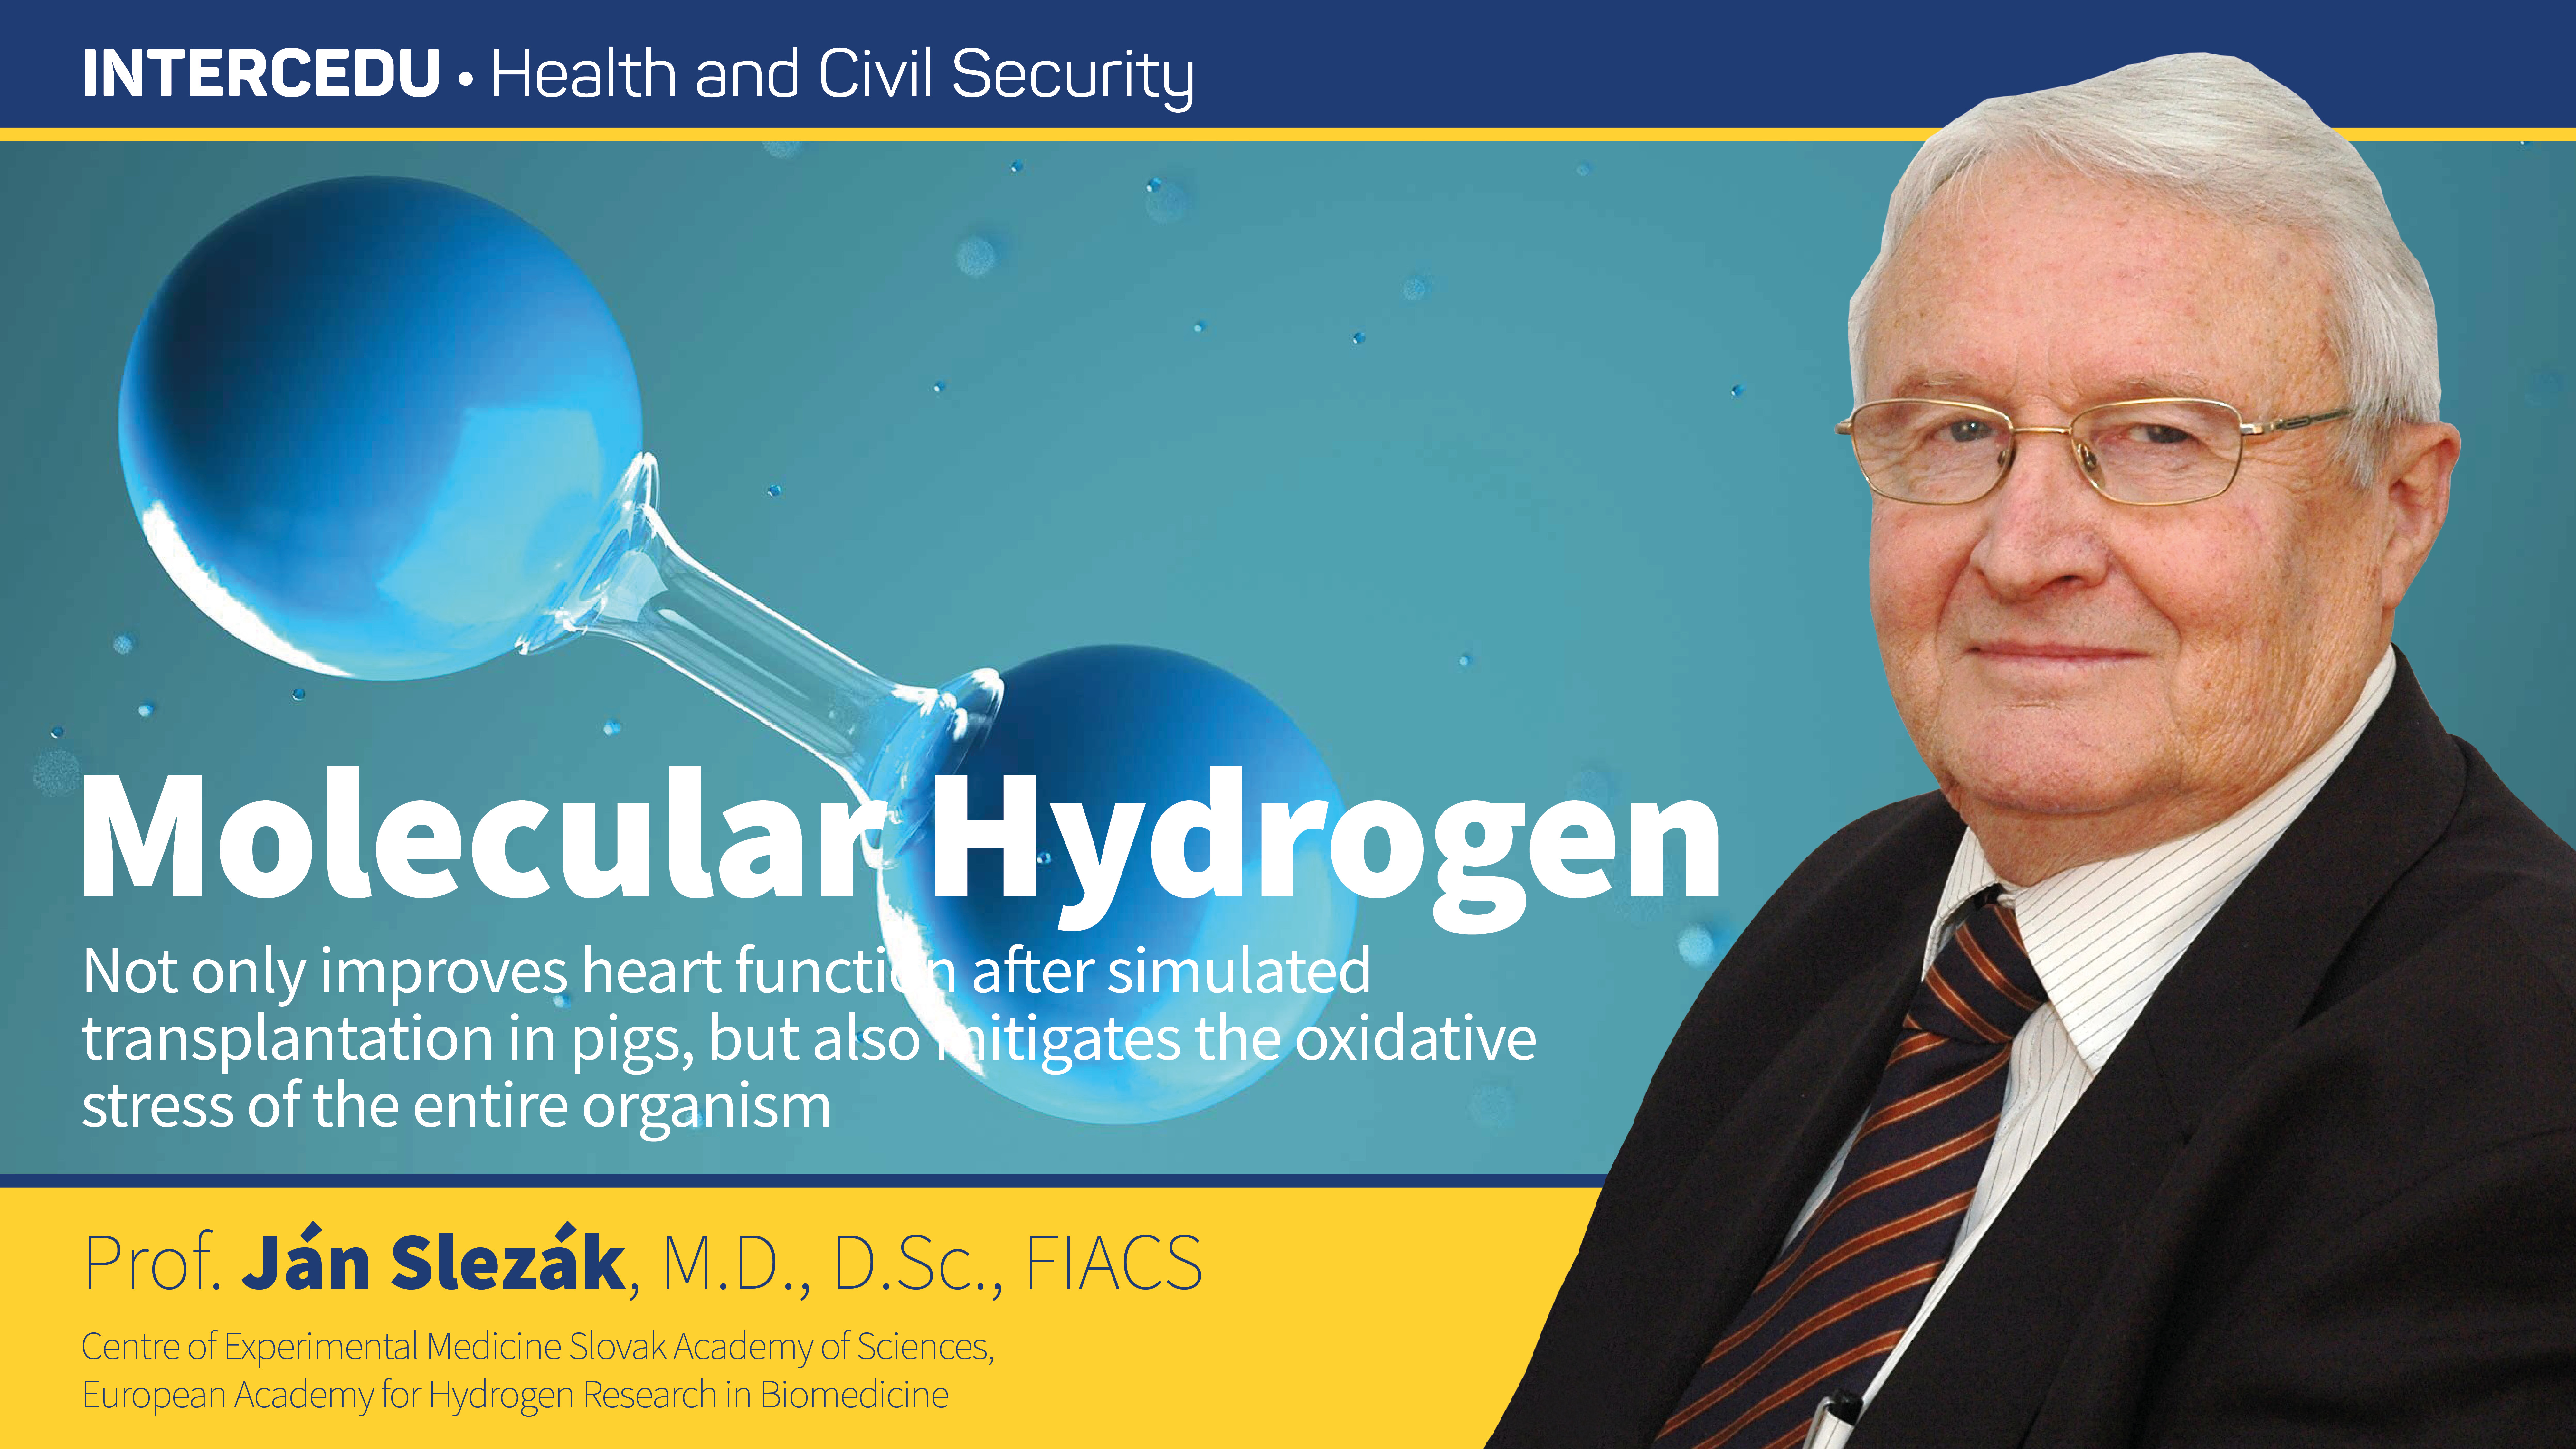 Jan Slezak: Molecular hydrogen improves heart function after simulated transplantation in pigs